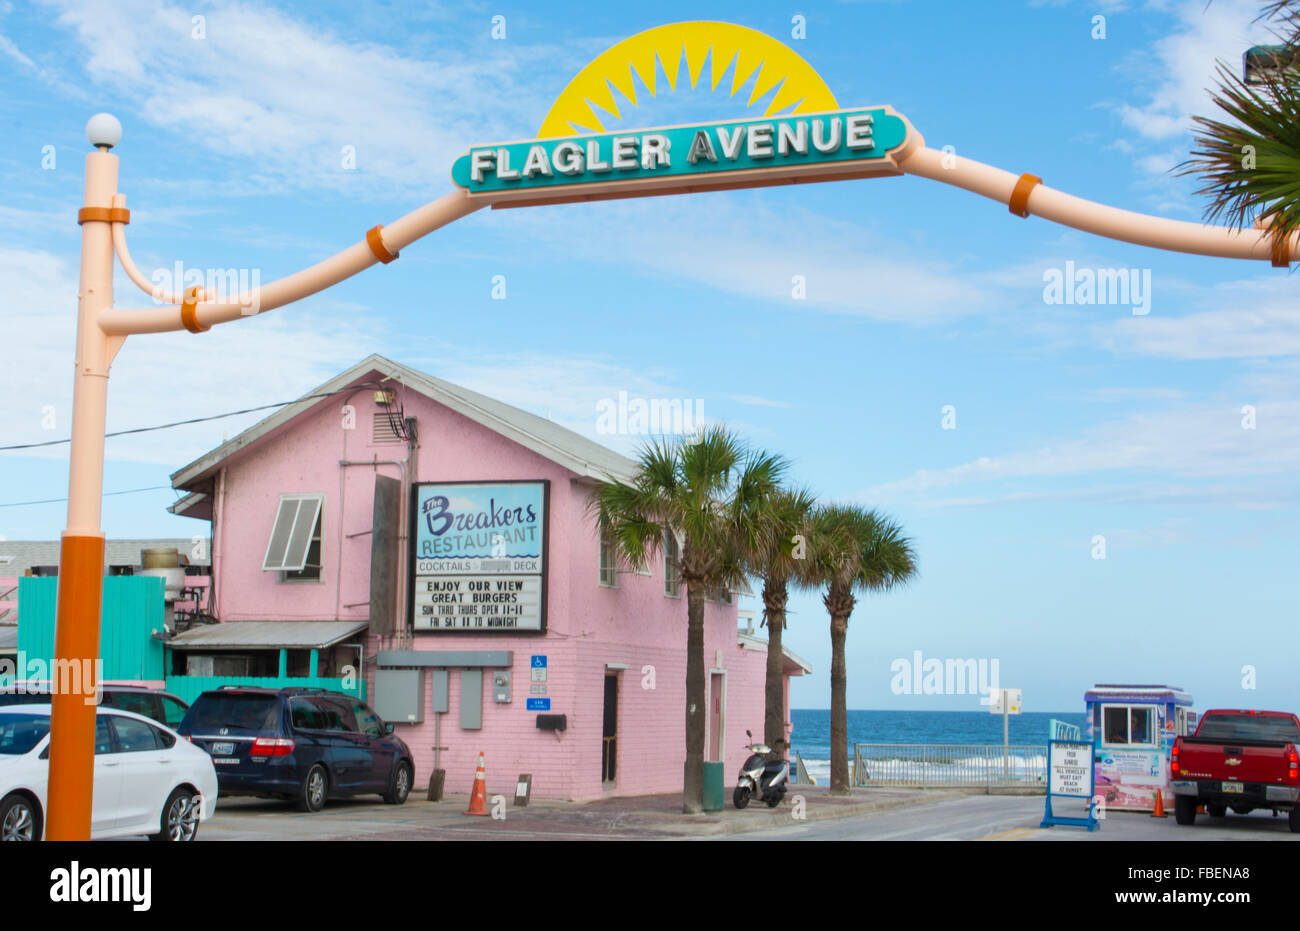 New Smyrna Beach Florida famous Flagler Avenue entrance to drive on